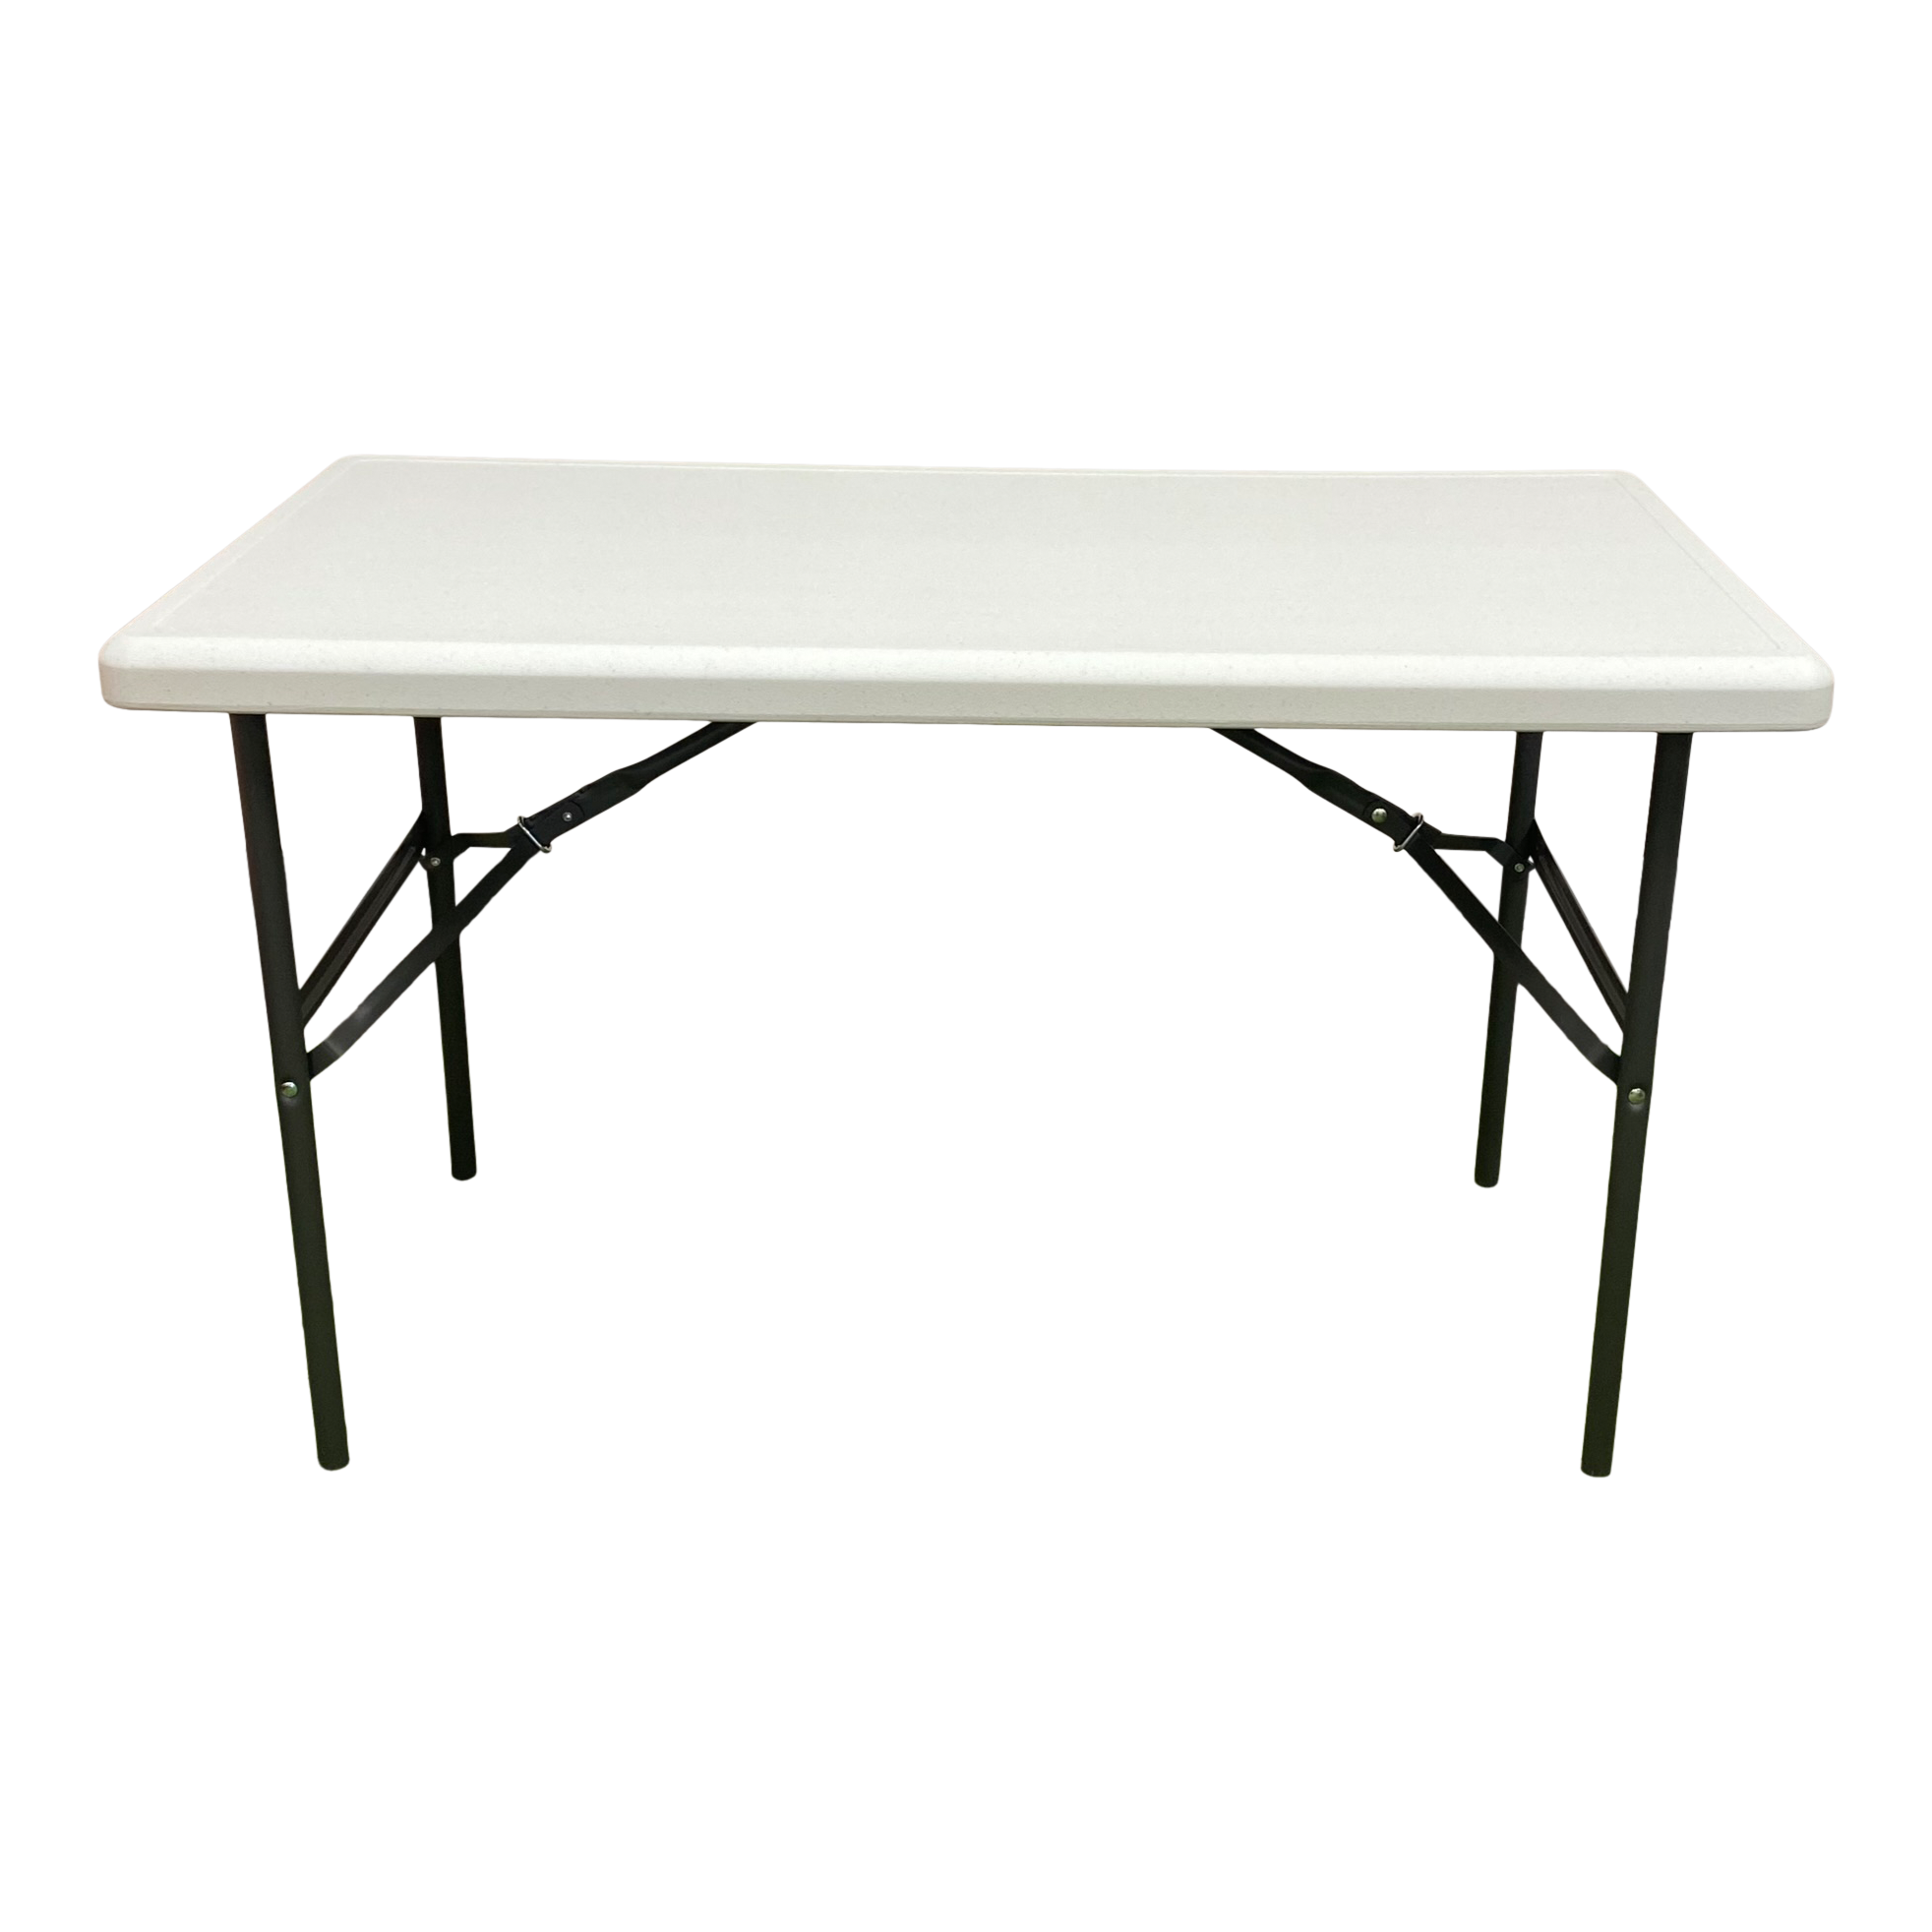 Platinum four-foot folding table open.